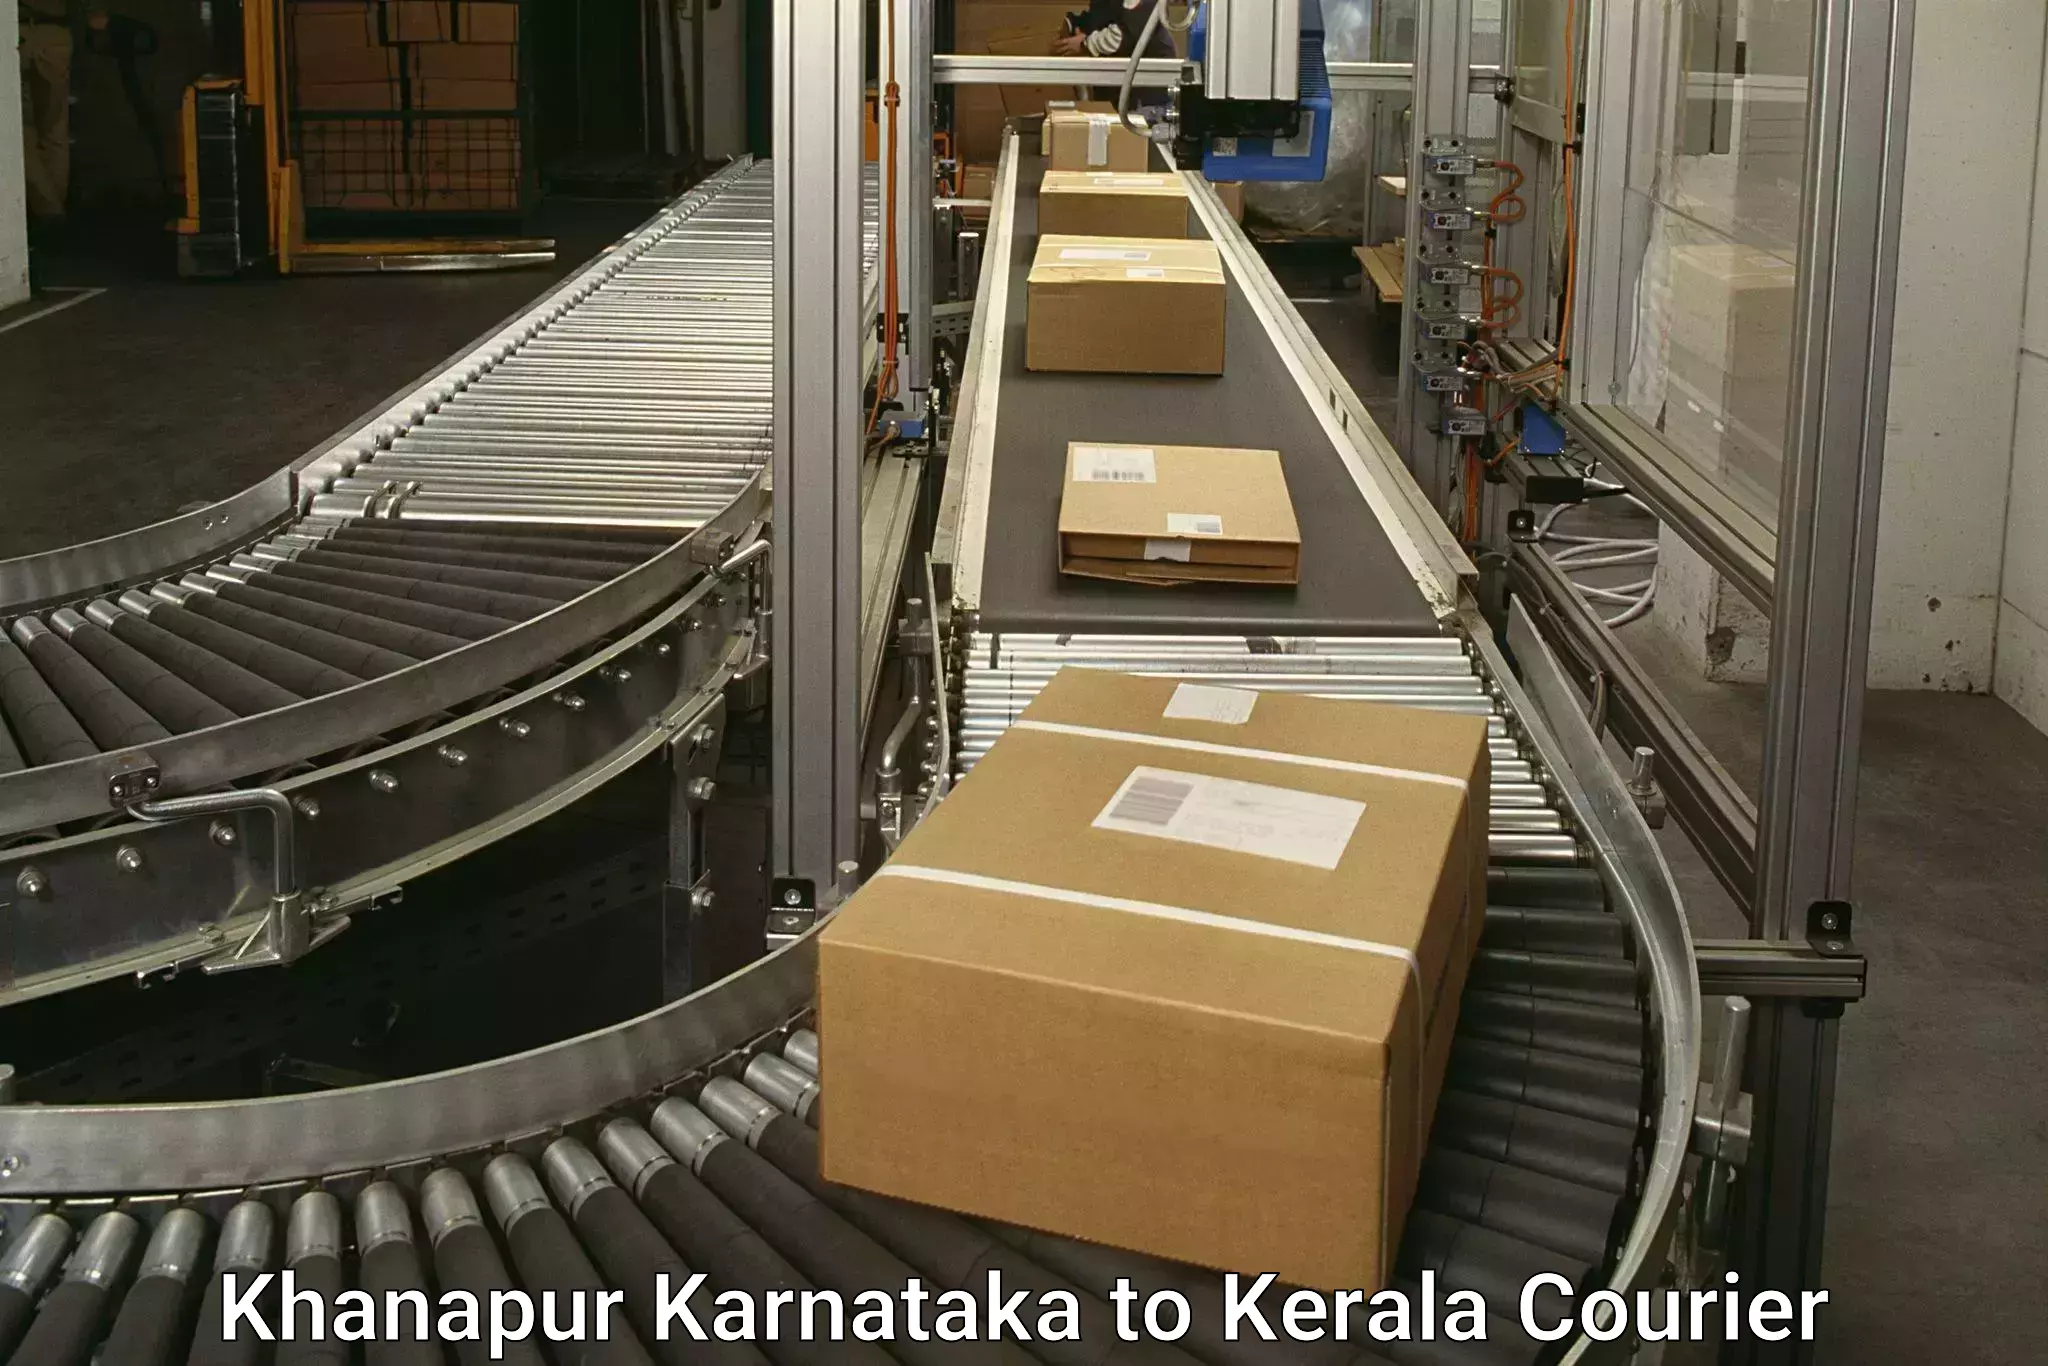 Express delivery network Khanapur Karnataka to Chavara